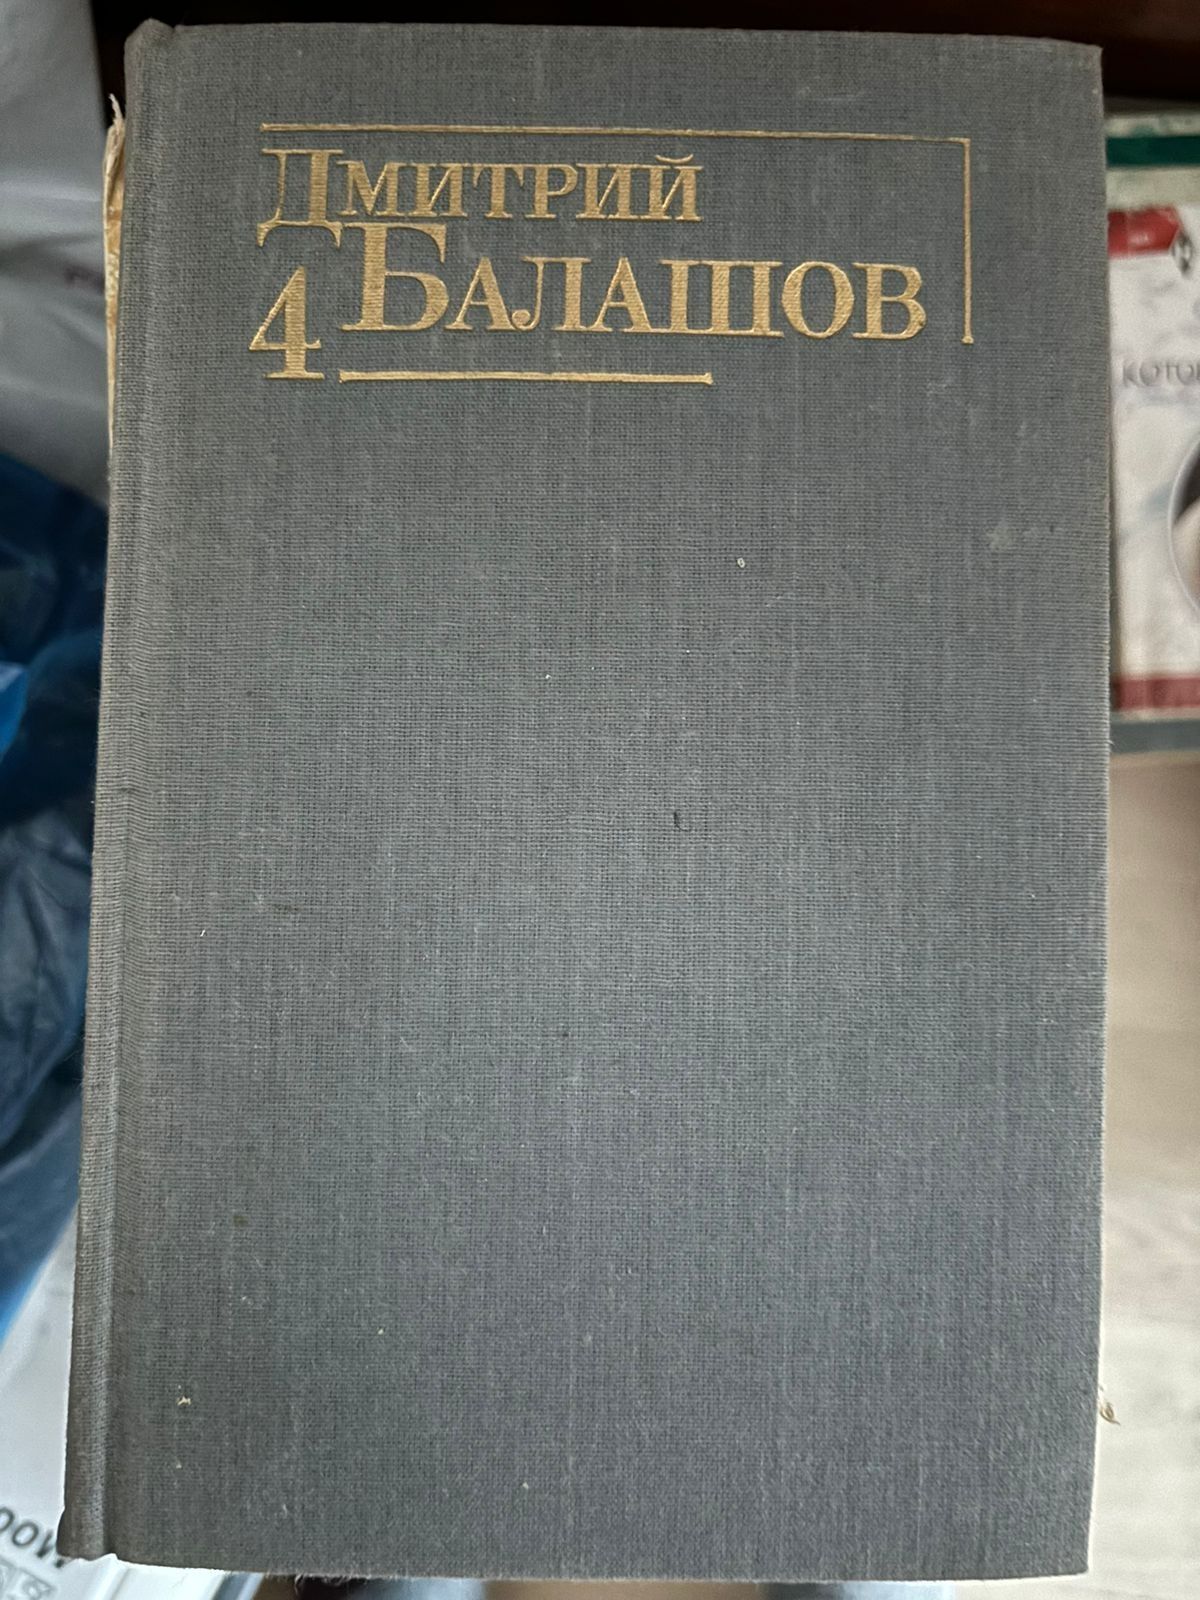 книги Дмитрий балашов